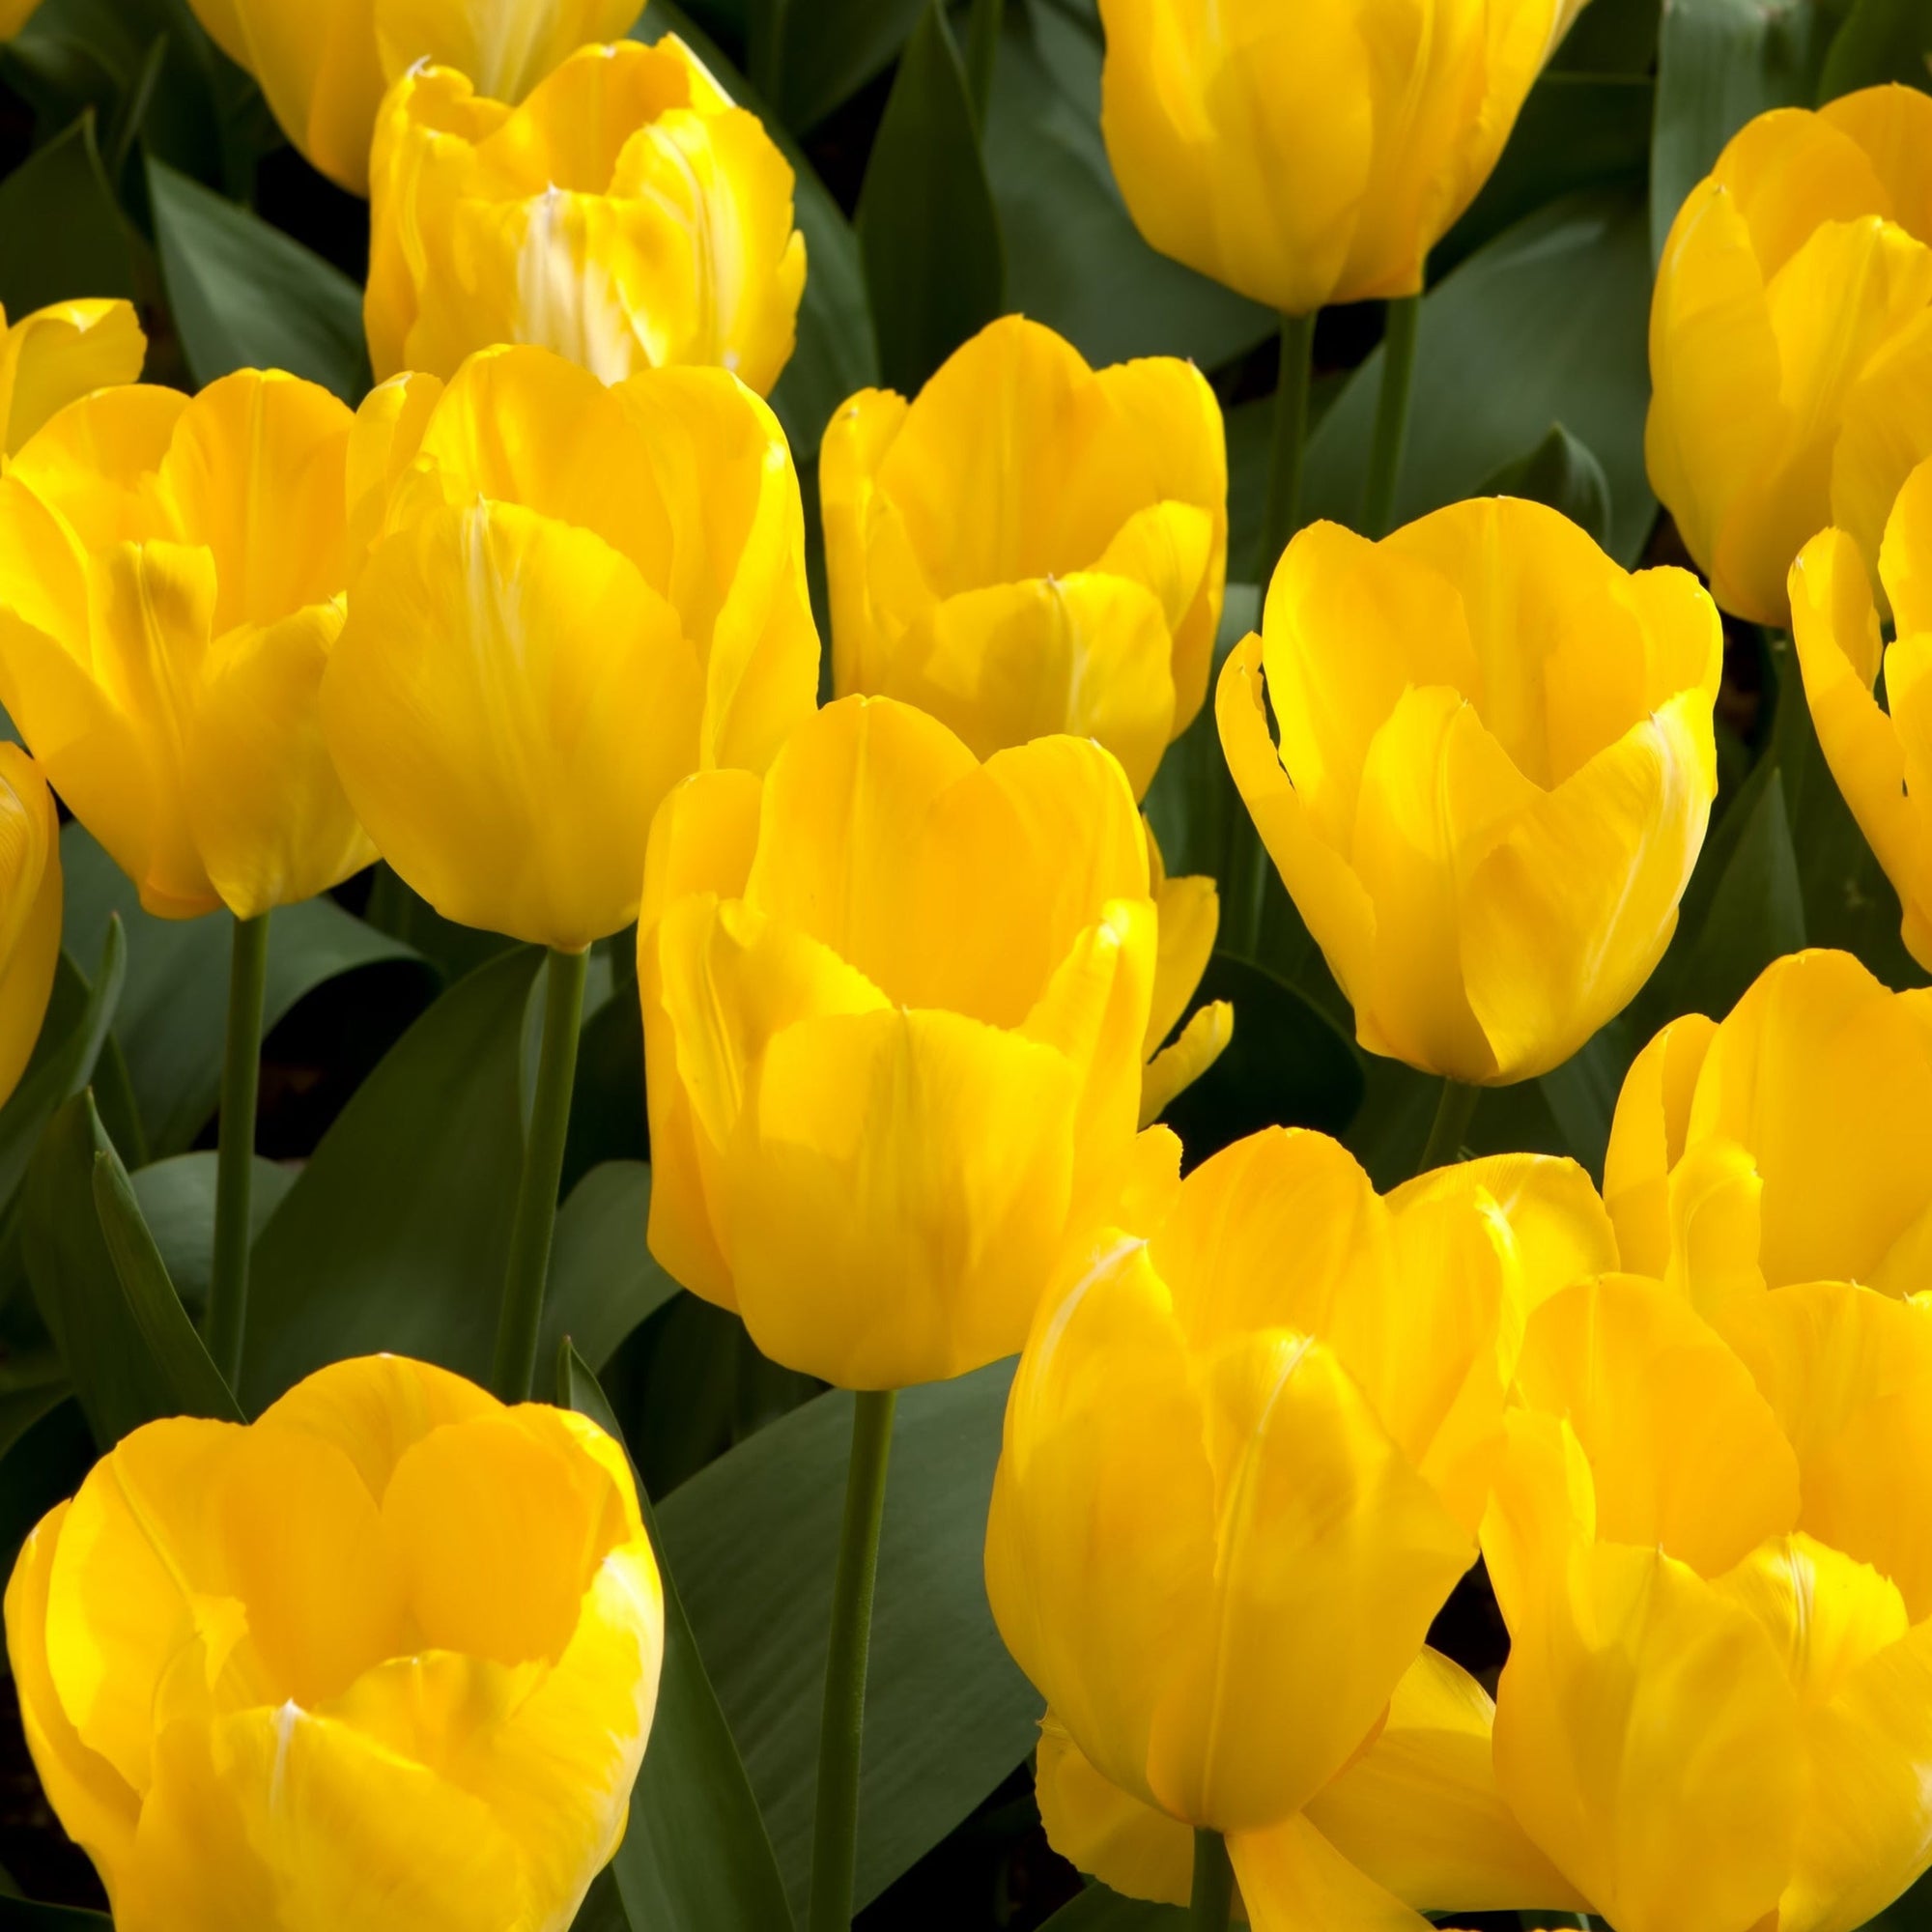 Tulip 'Candela' (6 Bulbs)